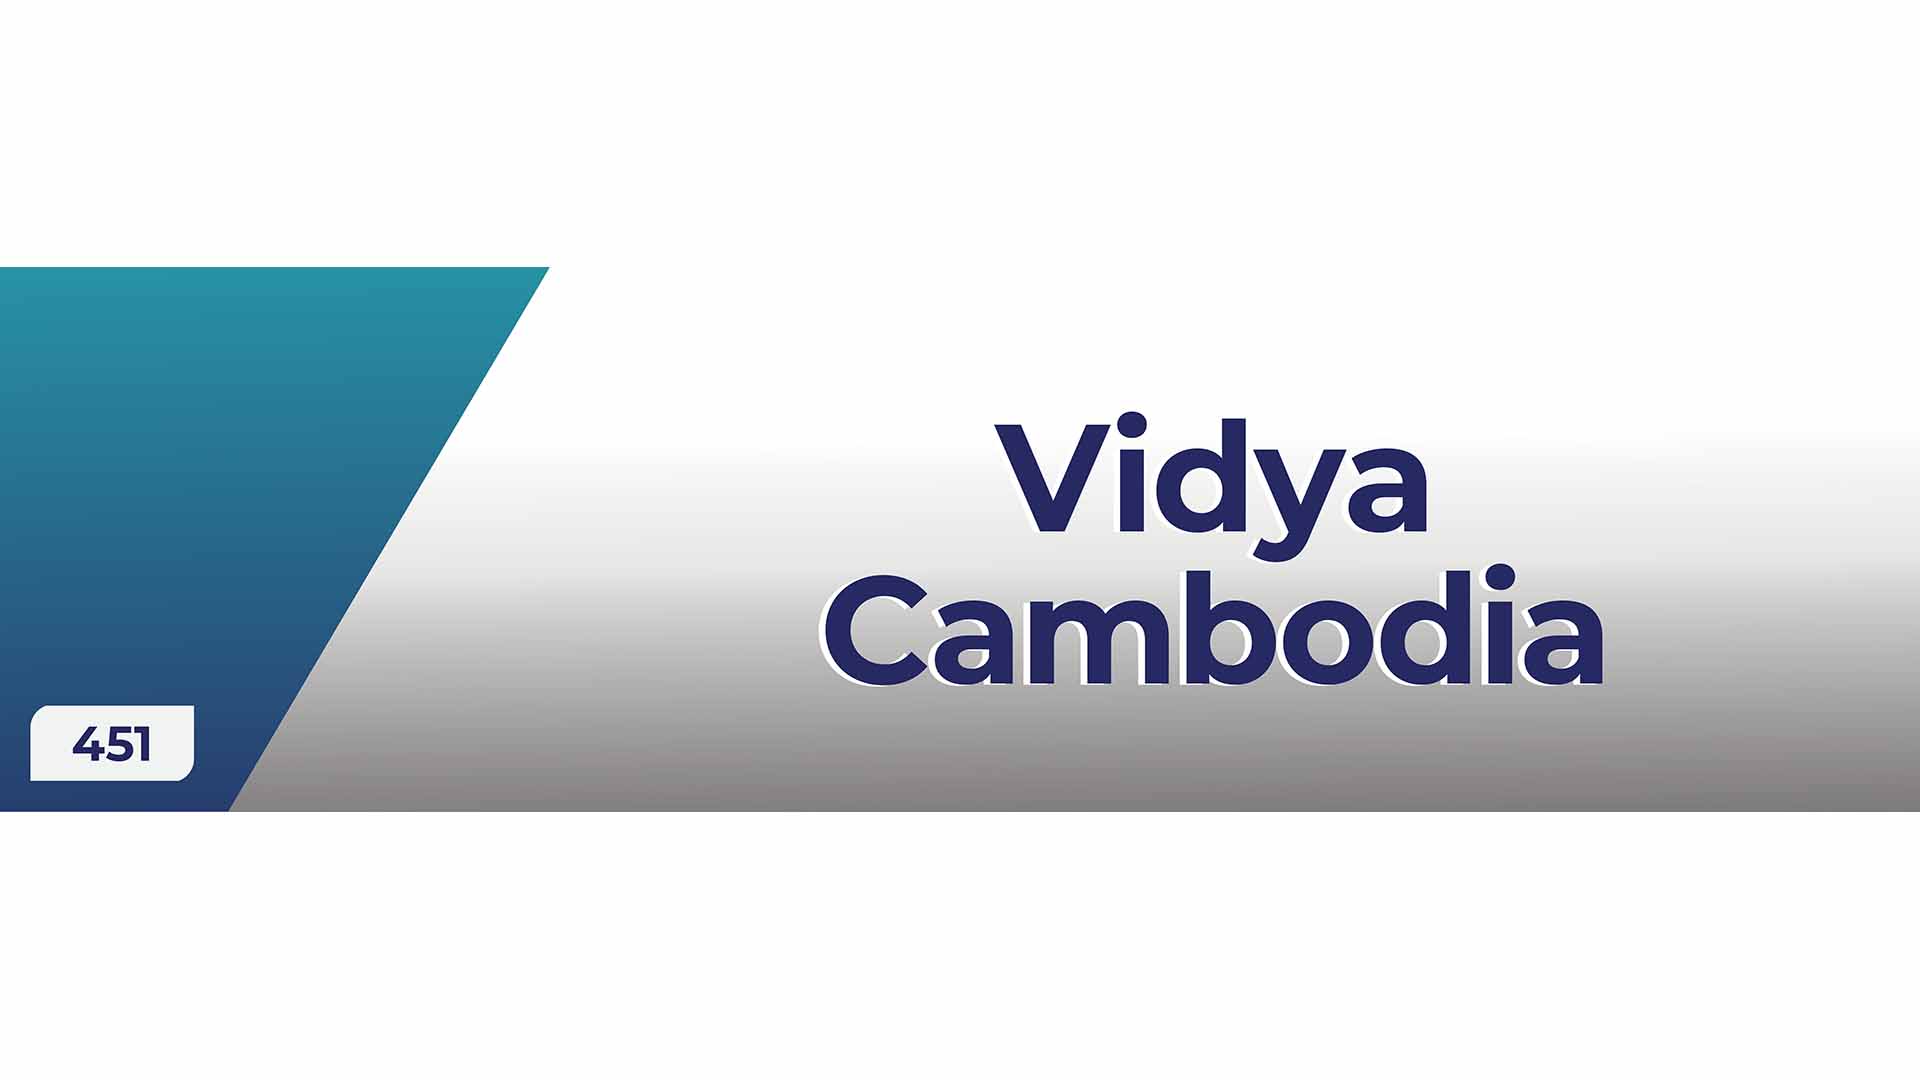 Vidya Cambodia logo